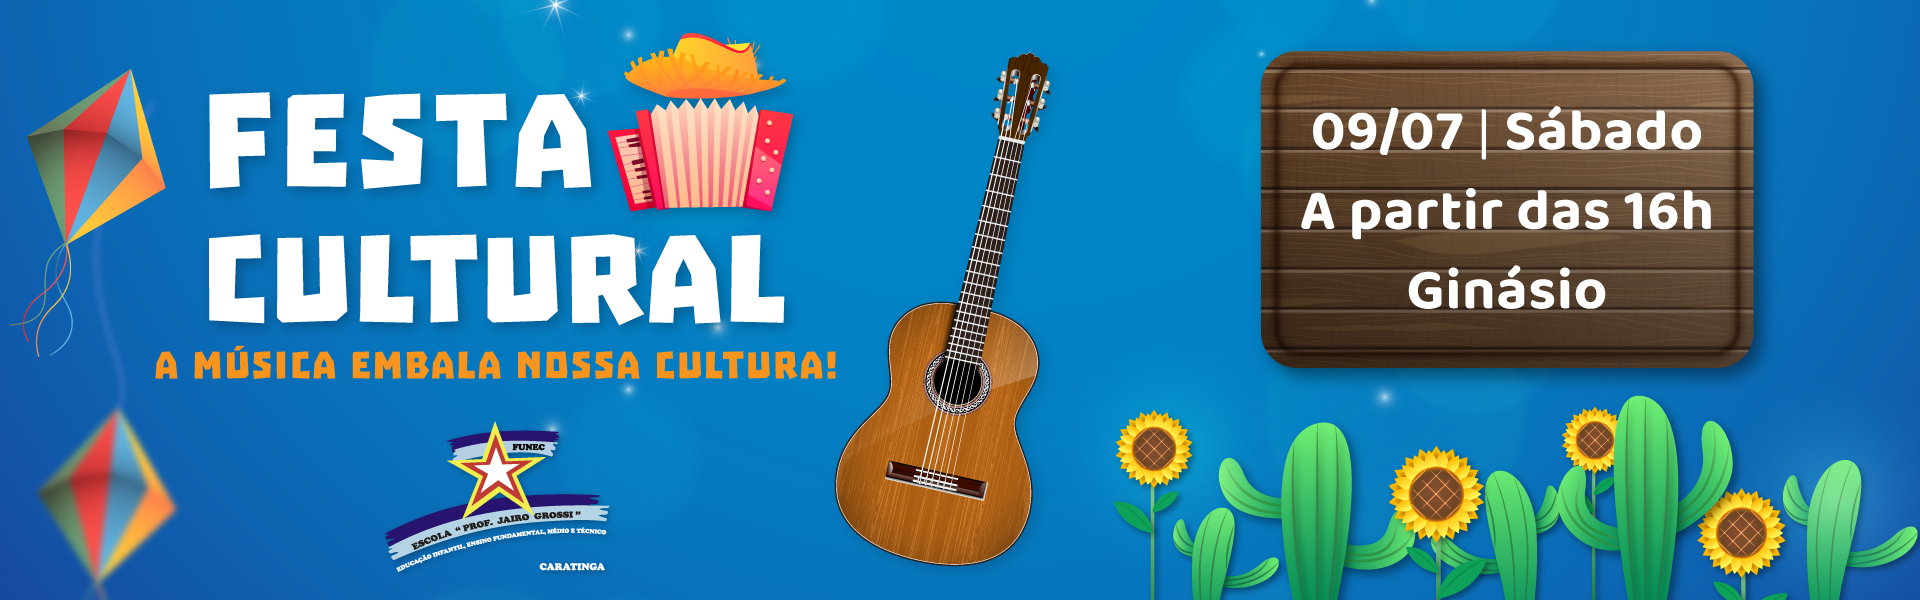 Festa Cultural. Venha participar conosco!